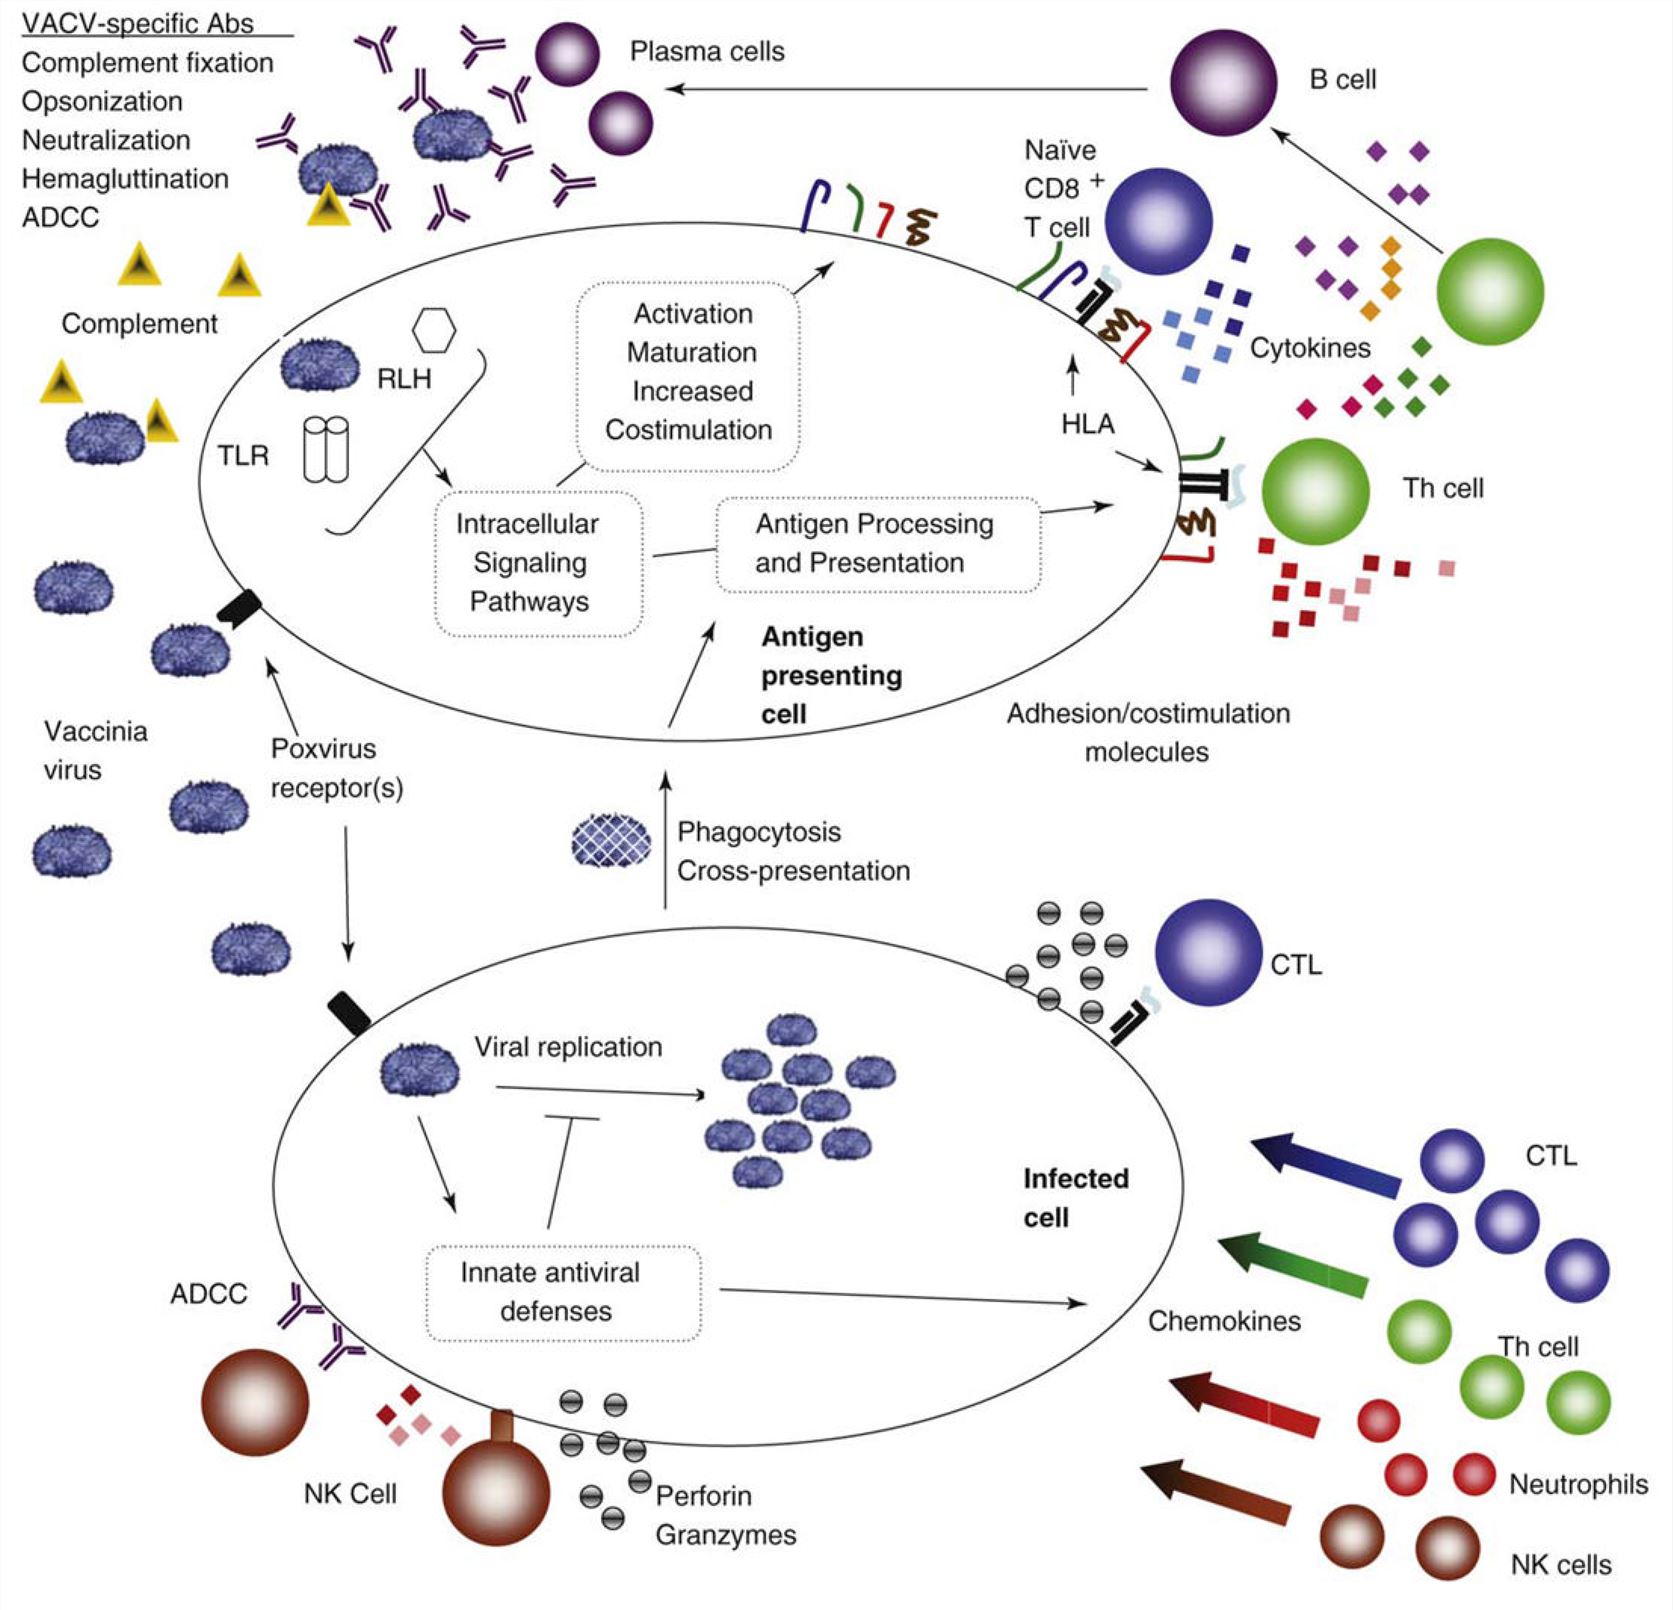 Immune response pathways activated by variola virus